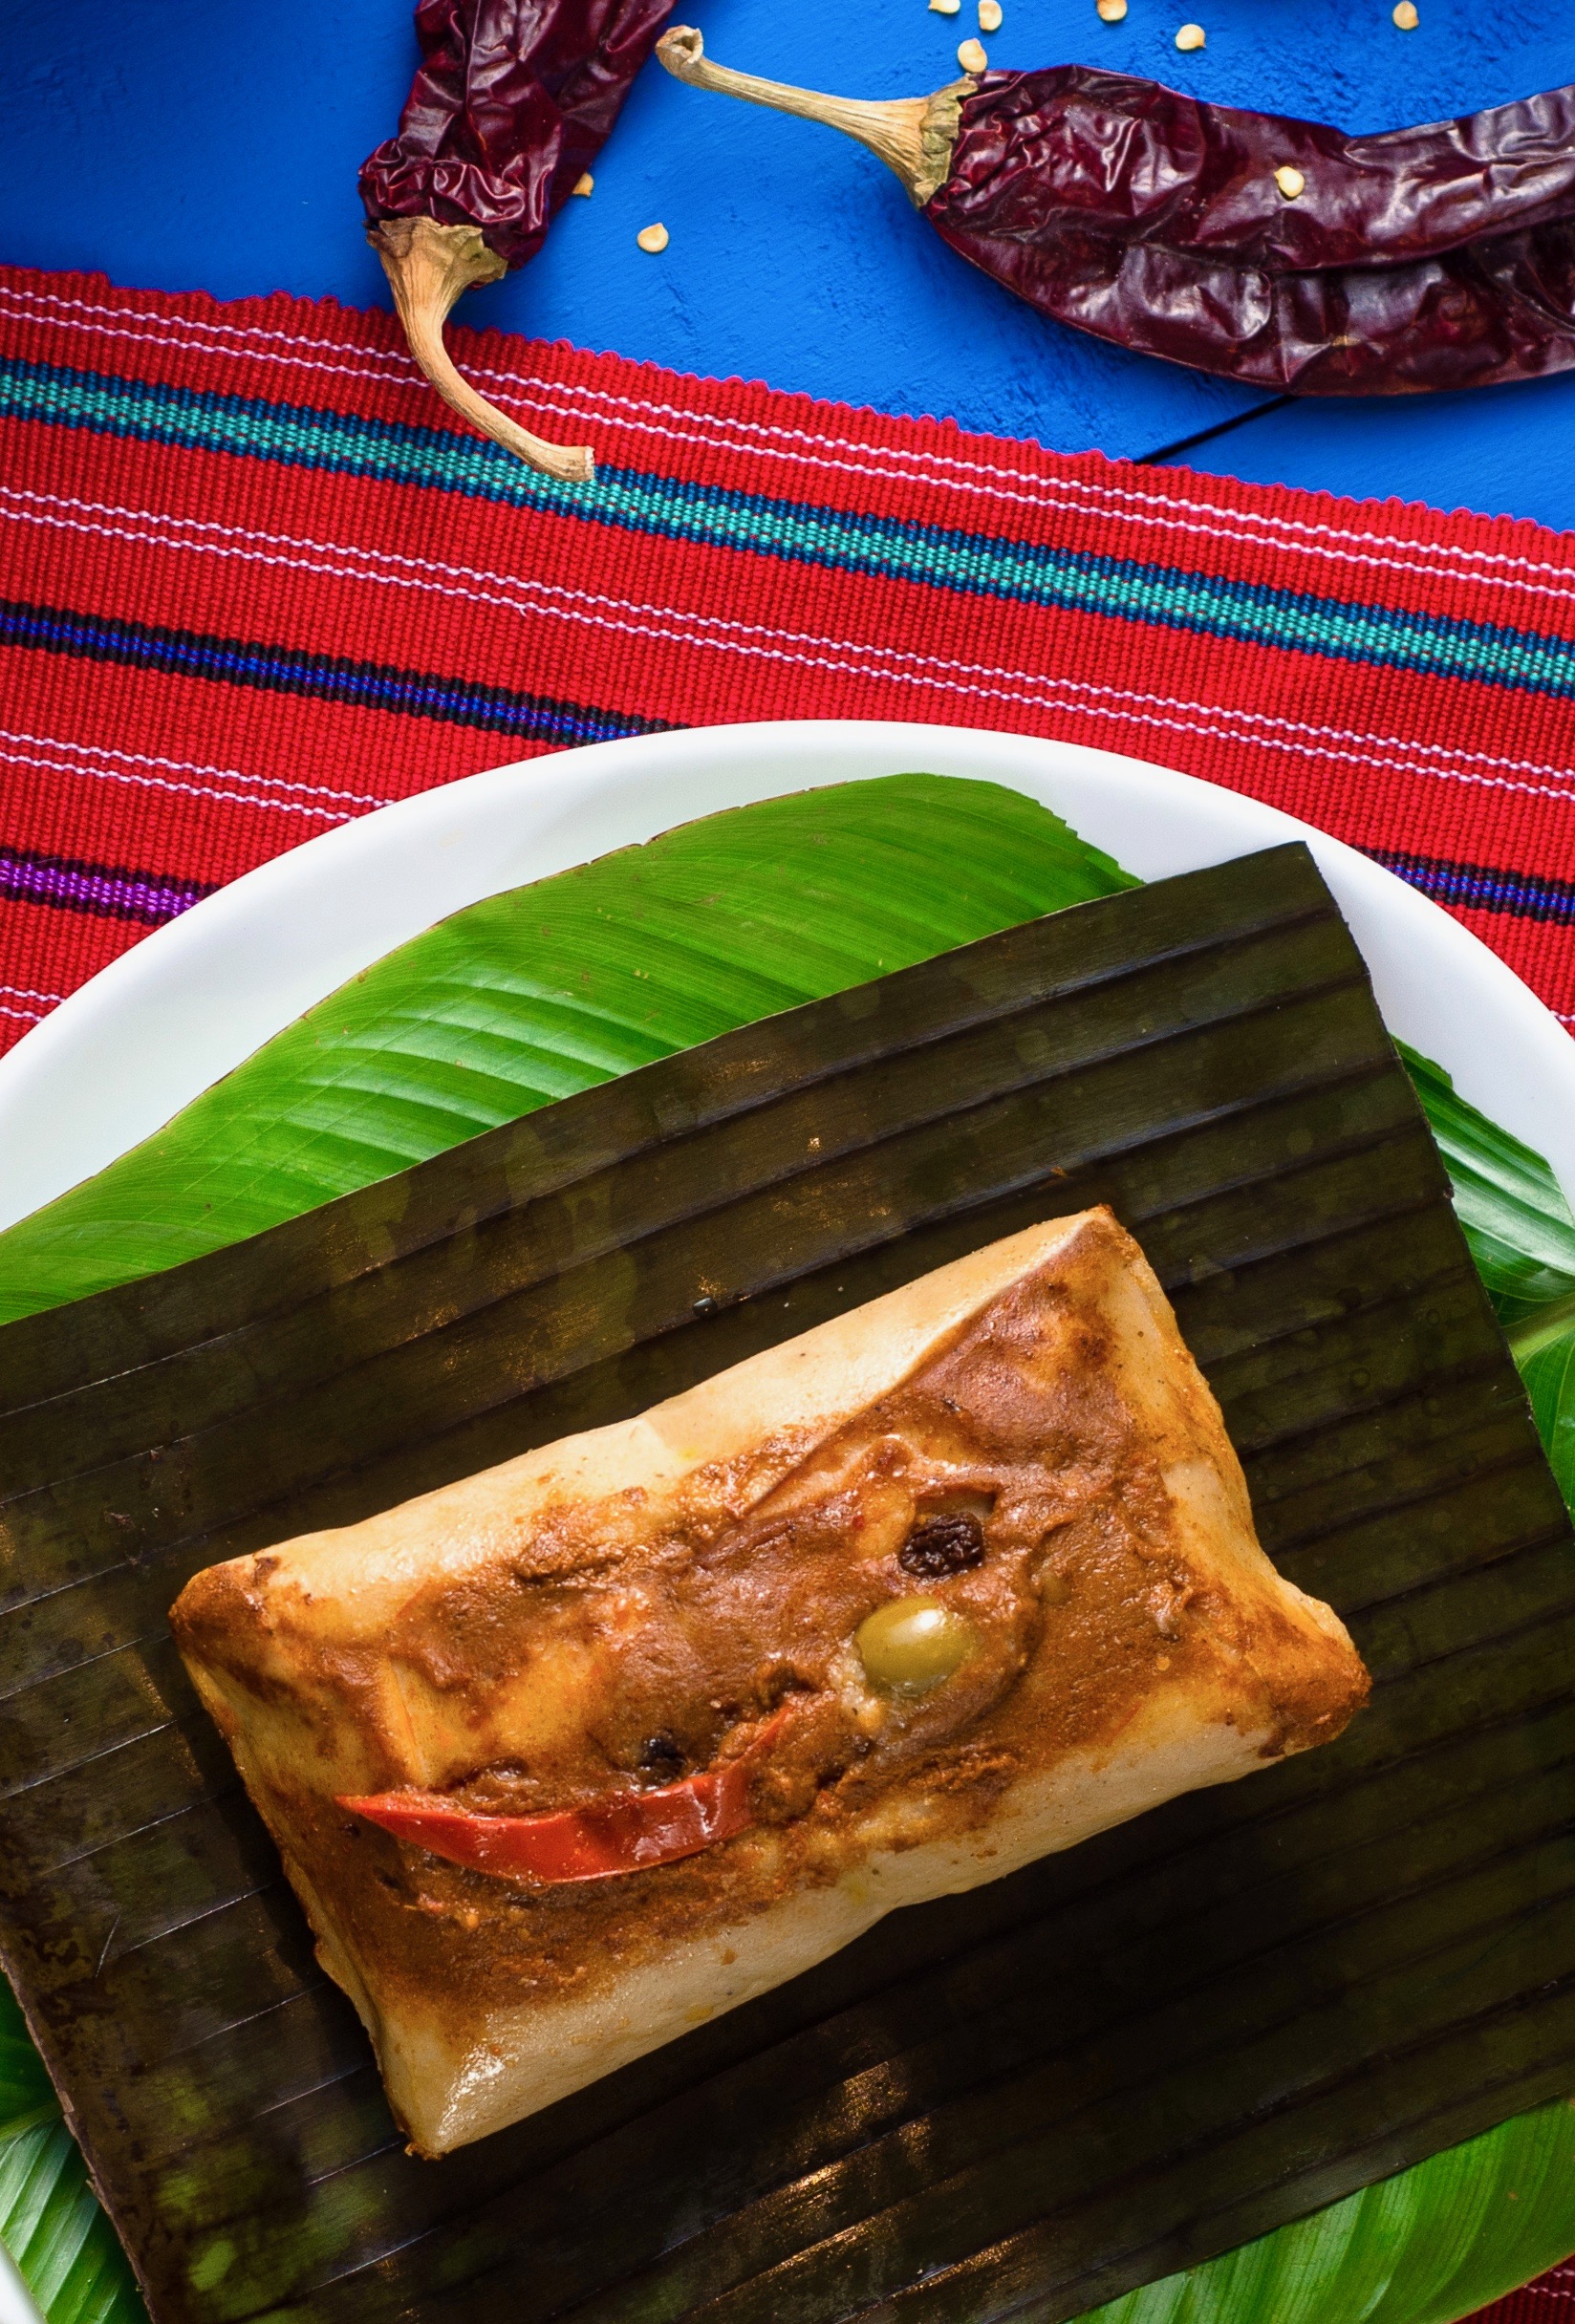 Tamales colorados, a traditonal dish for Christmas and saturdays